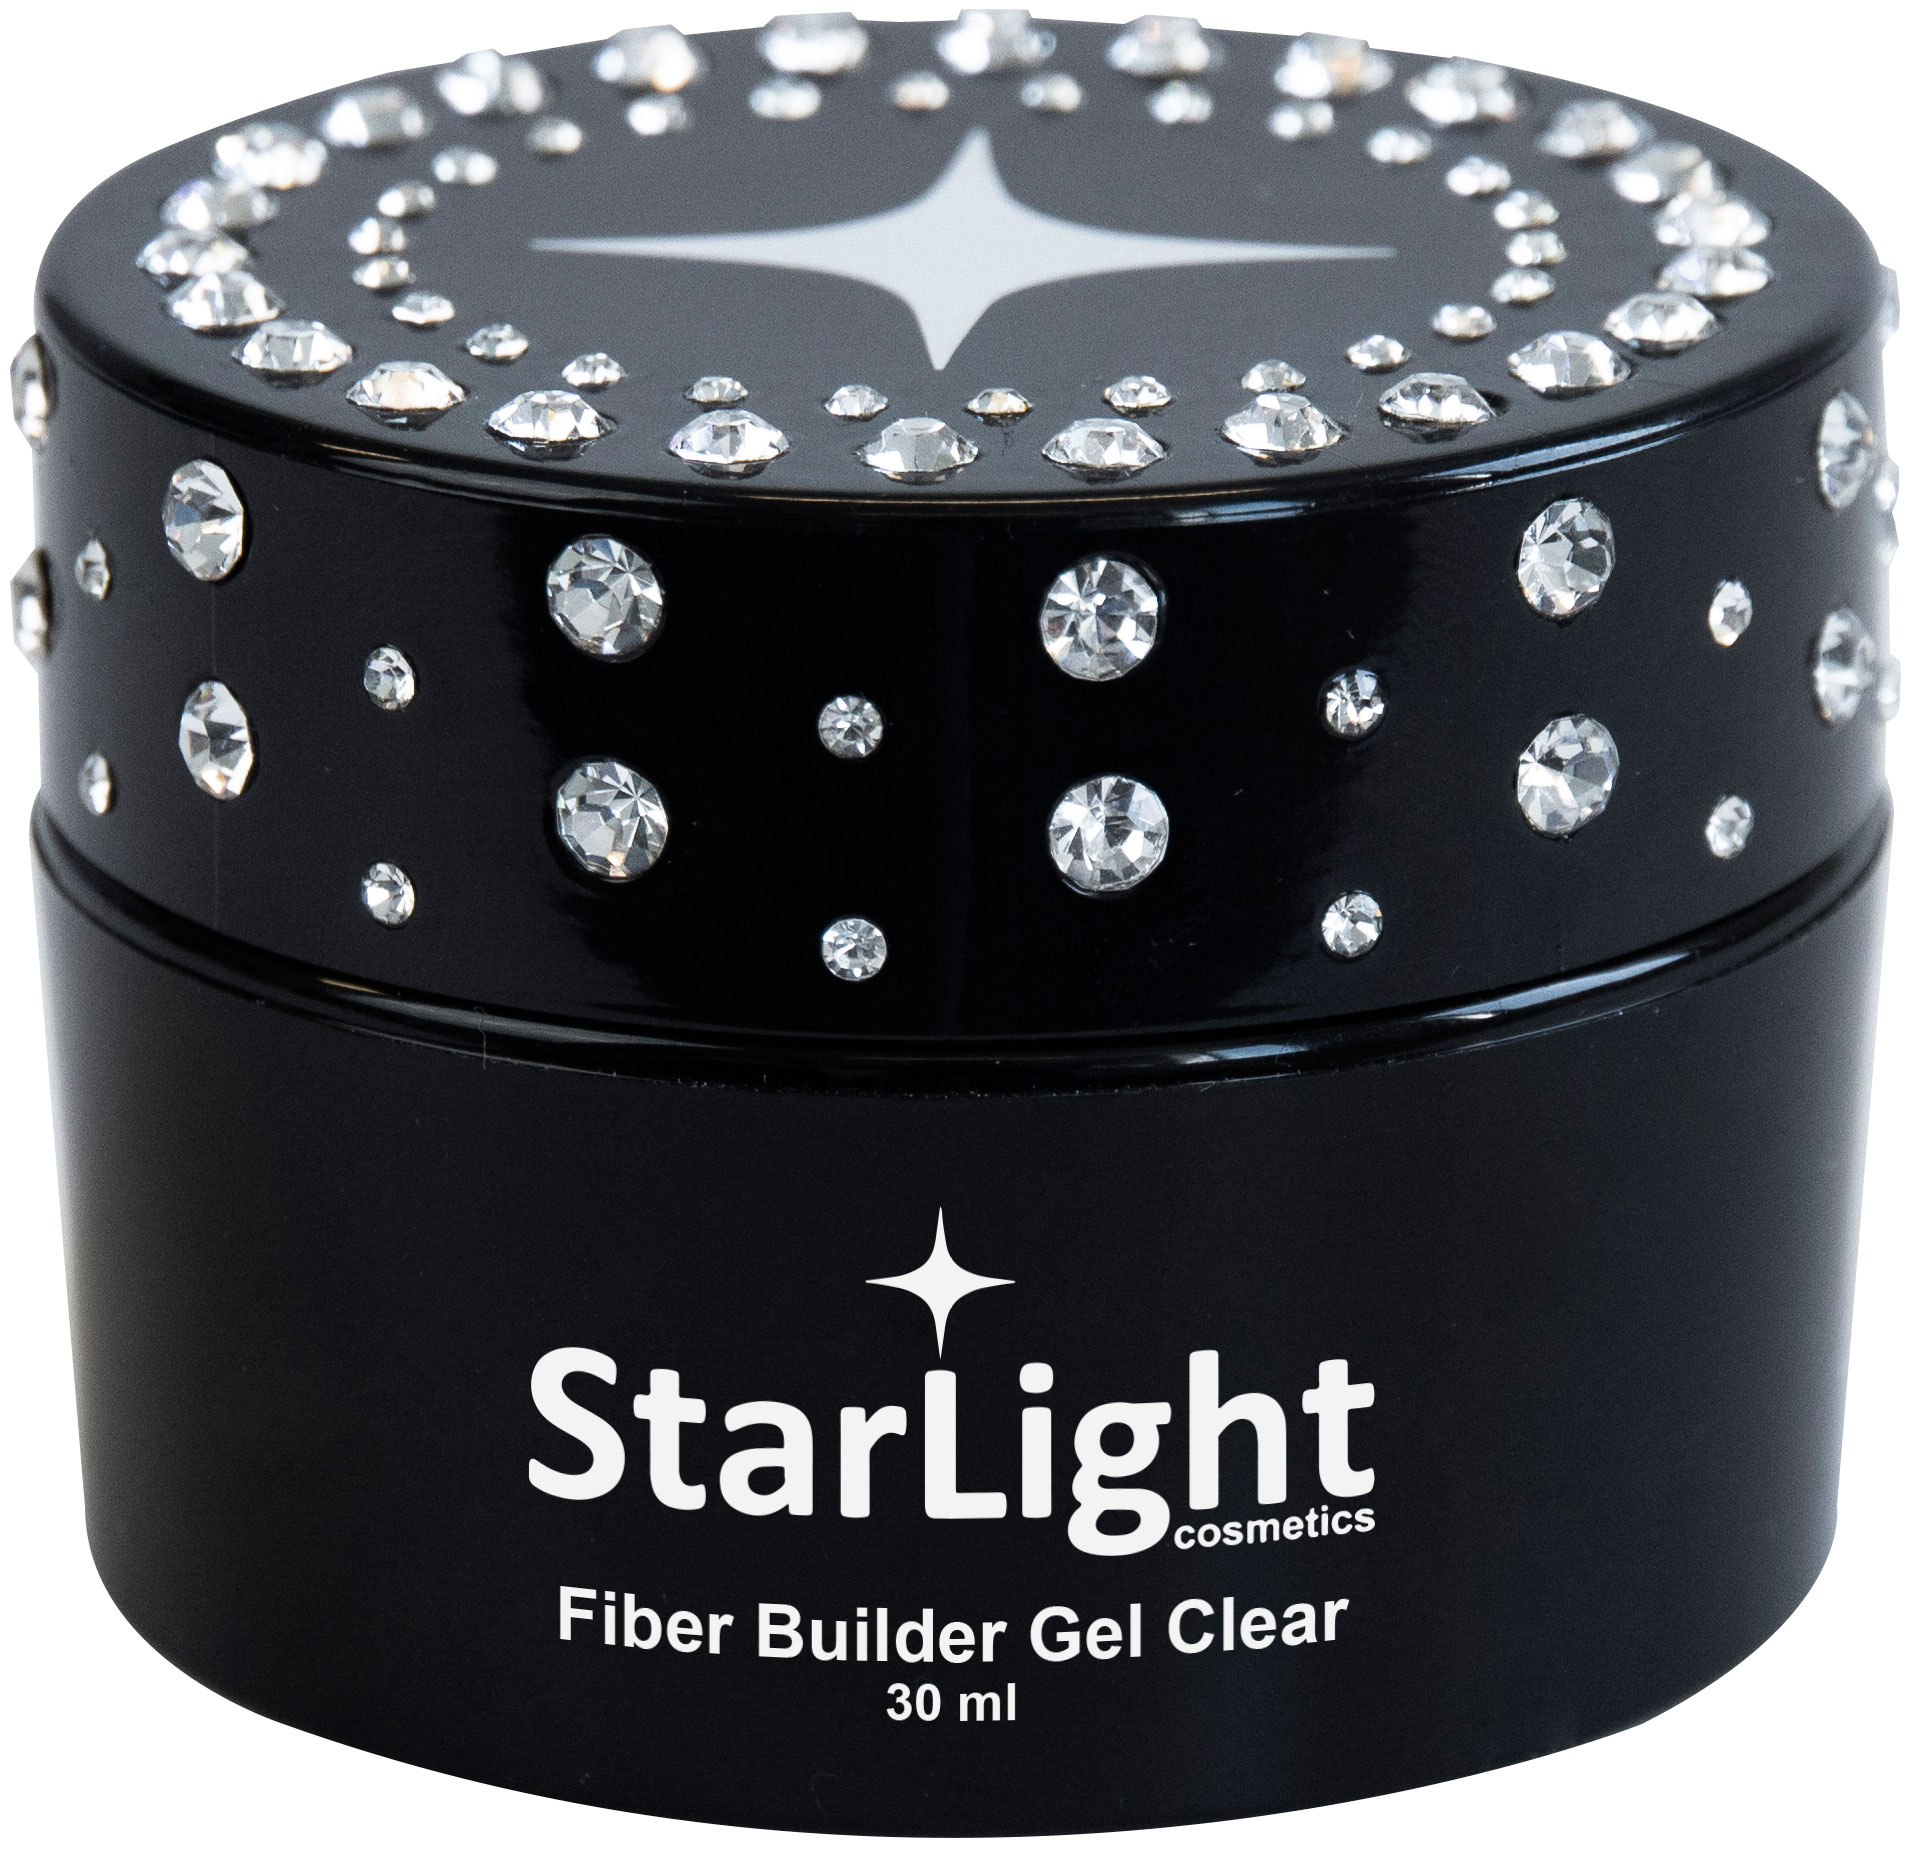 Naglar Fiber Builder Gel Clear - 30 ml